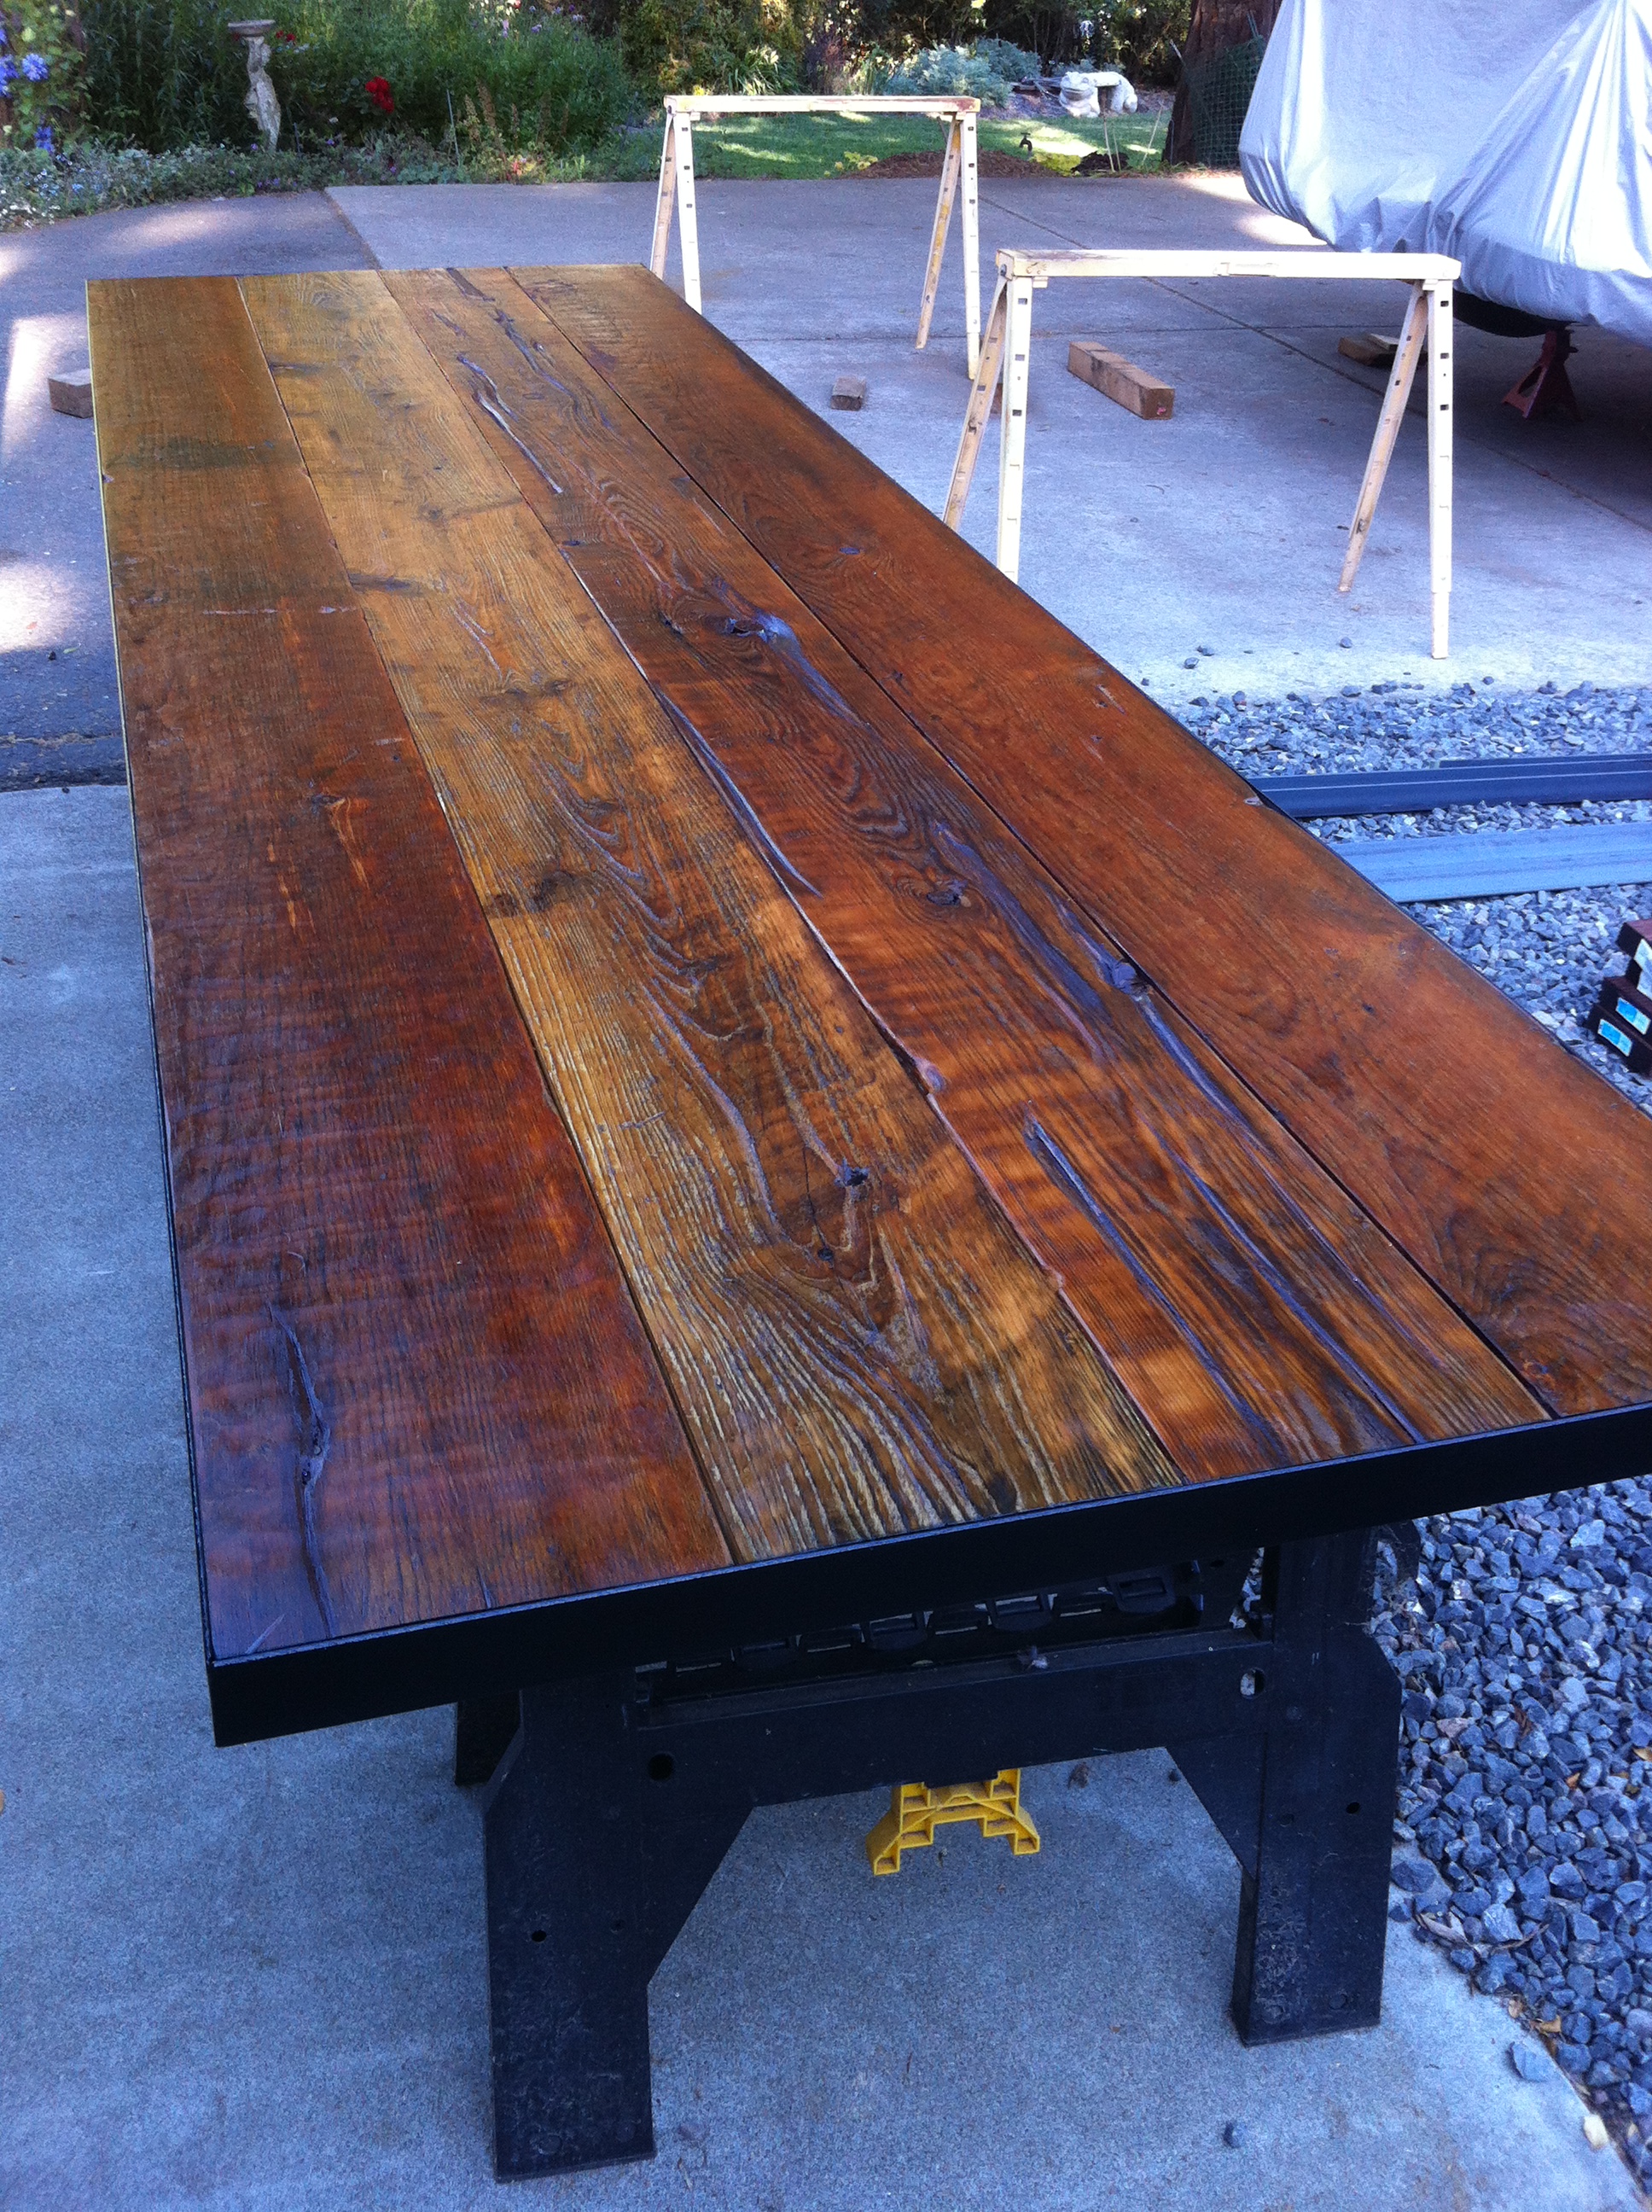 3 foot by 10 foot reclaimed rustic wood table tops